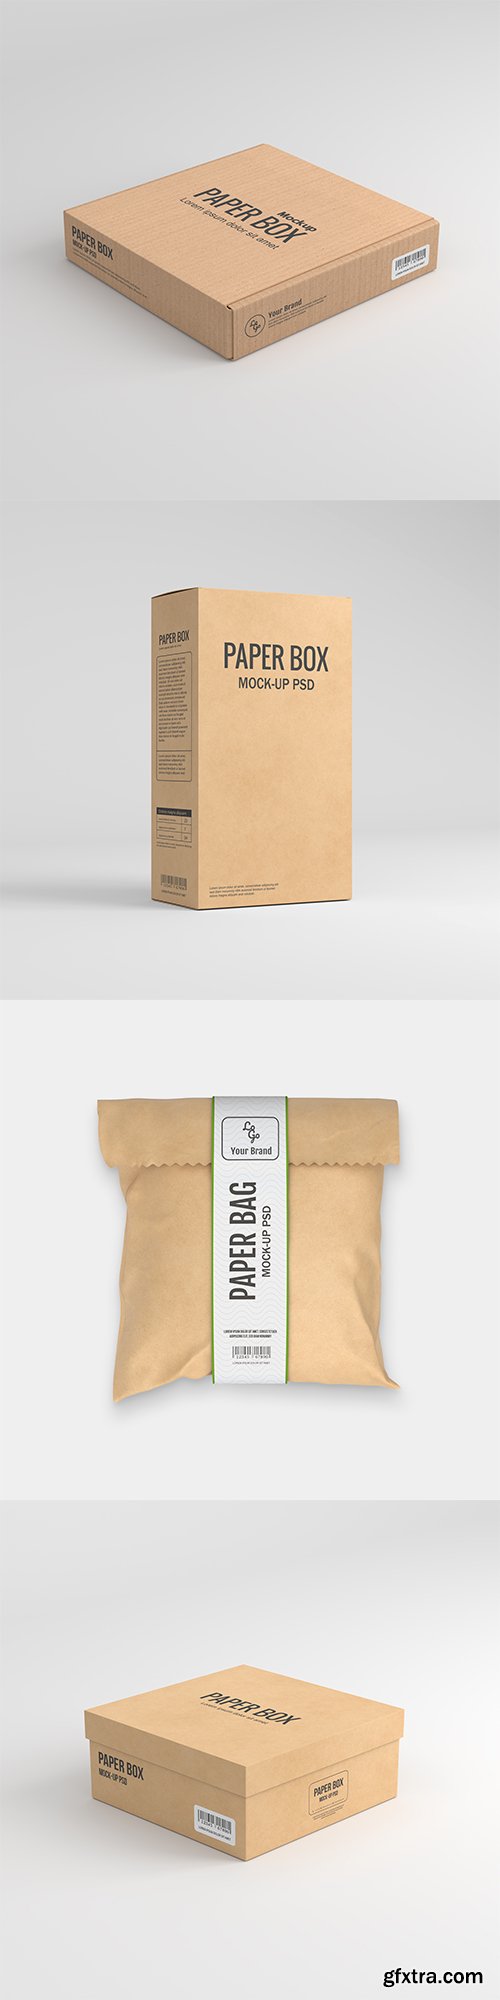 Set of Paper Bag and Box Packaging PSD Mockup vol2